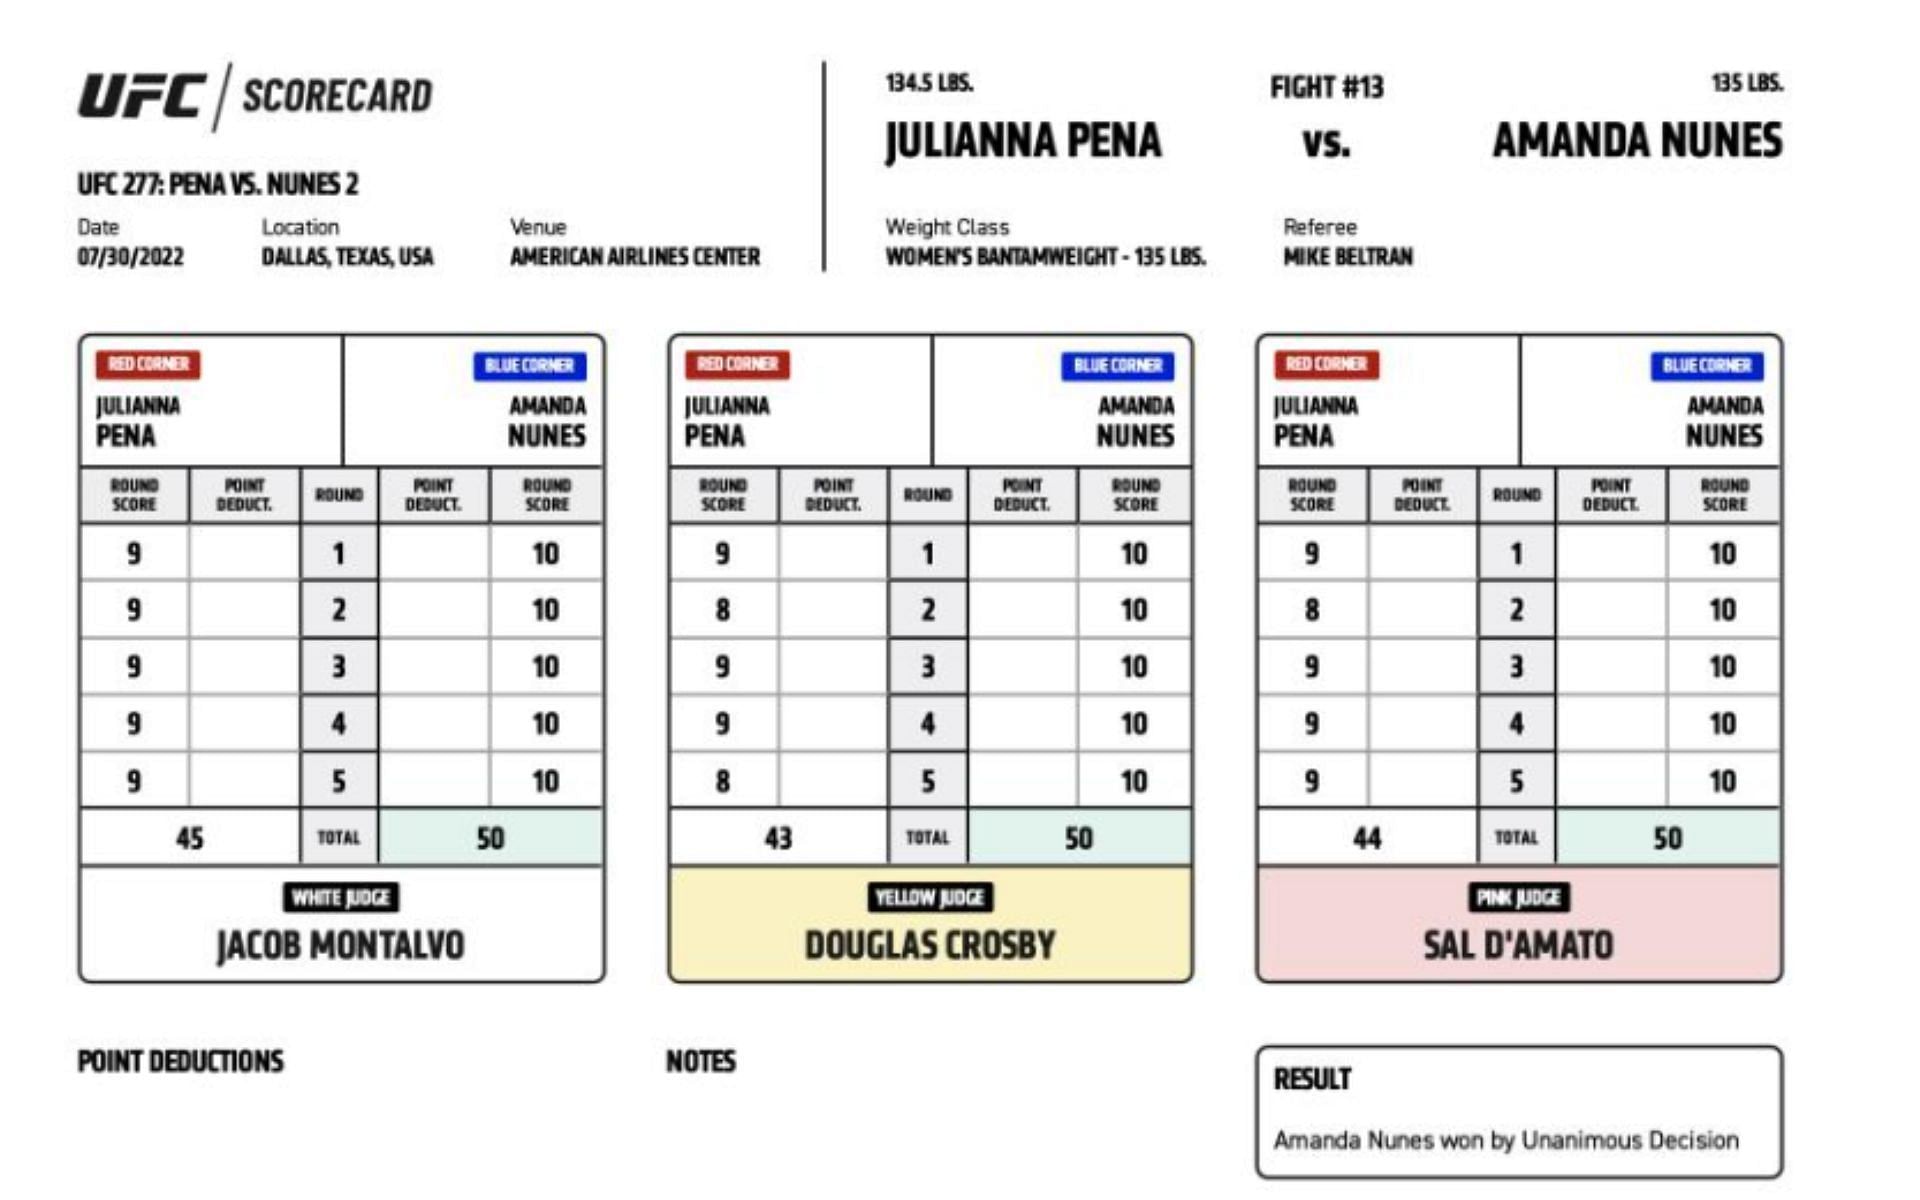 The official score card for the fight [Image via ufc.com]